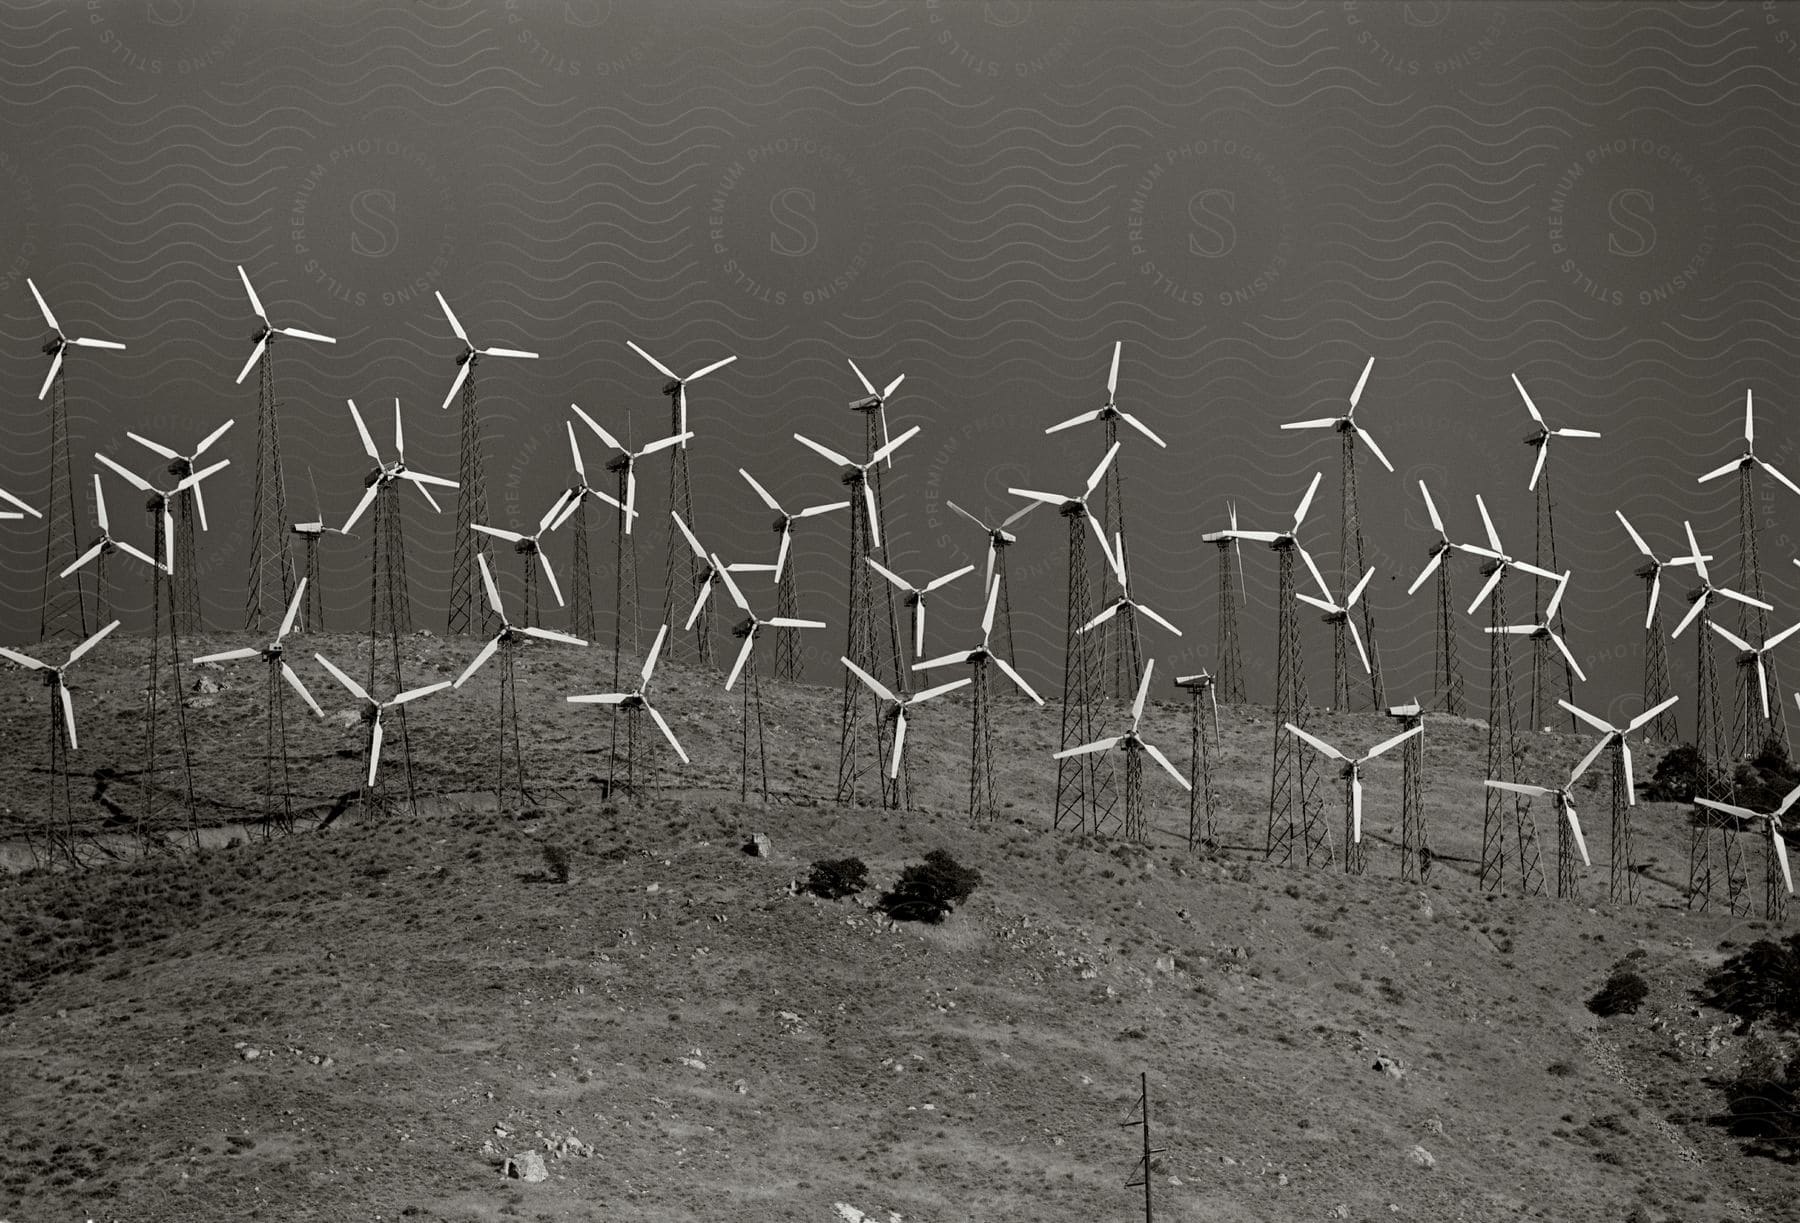 Numerous wind turbines in a field under a night sky